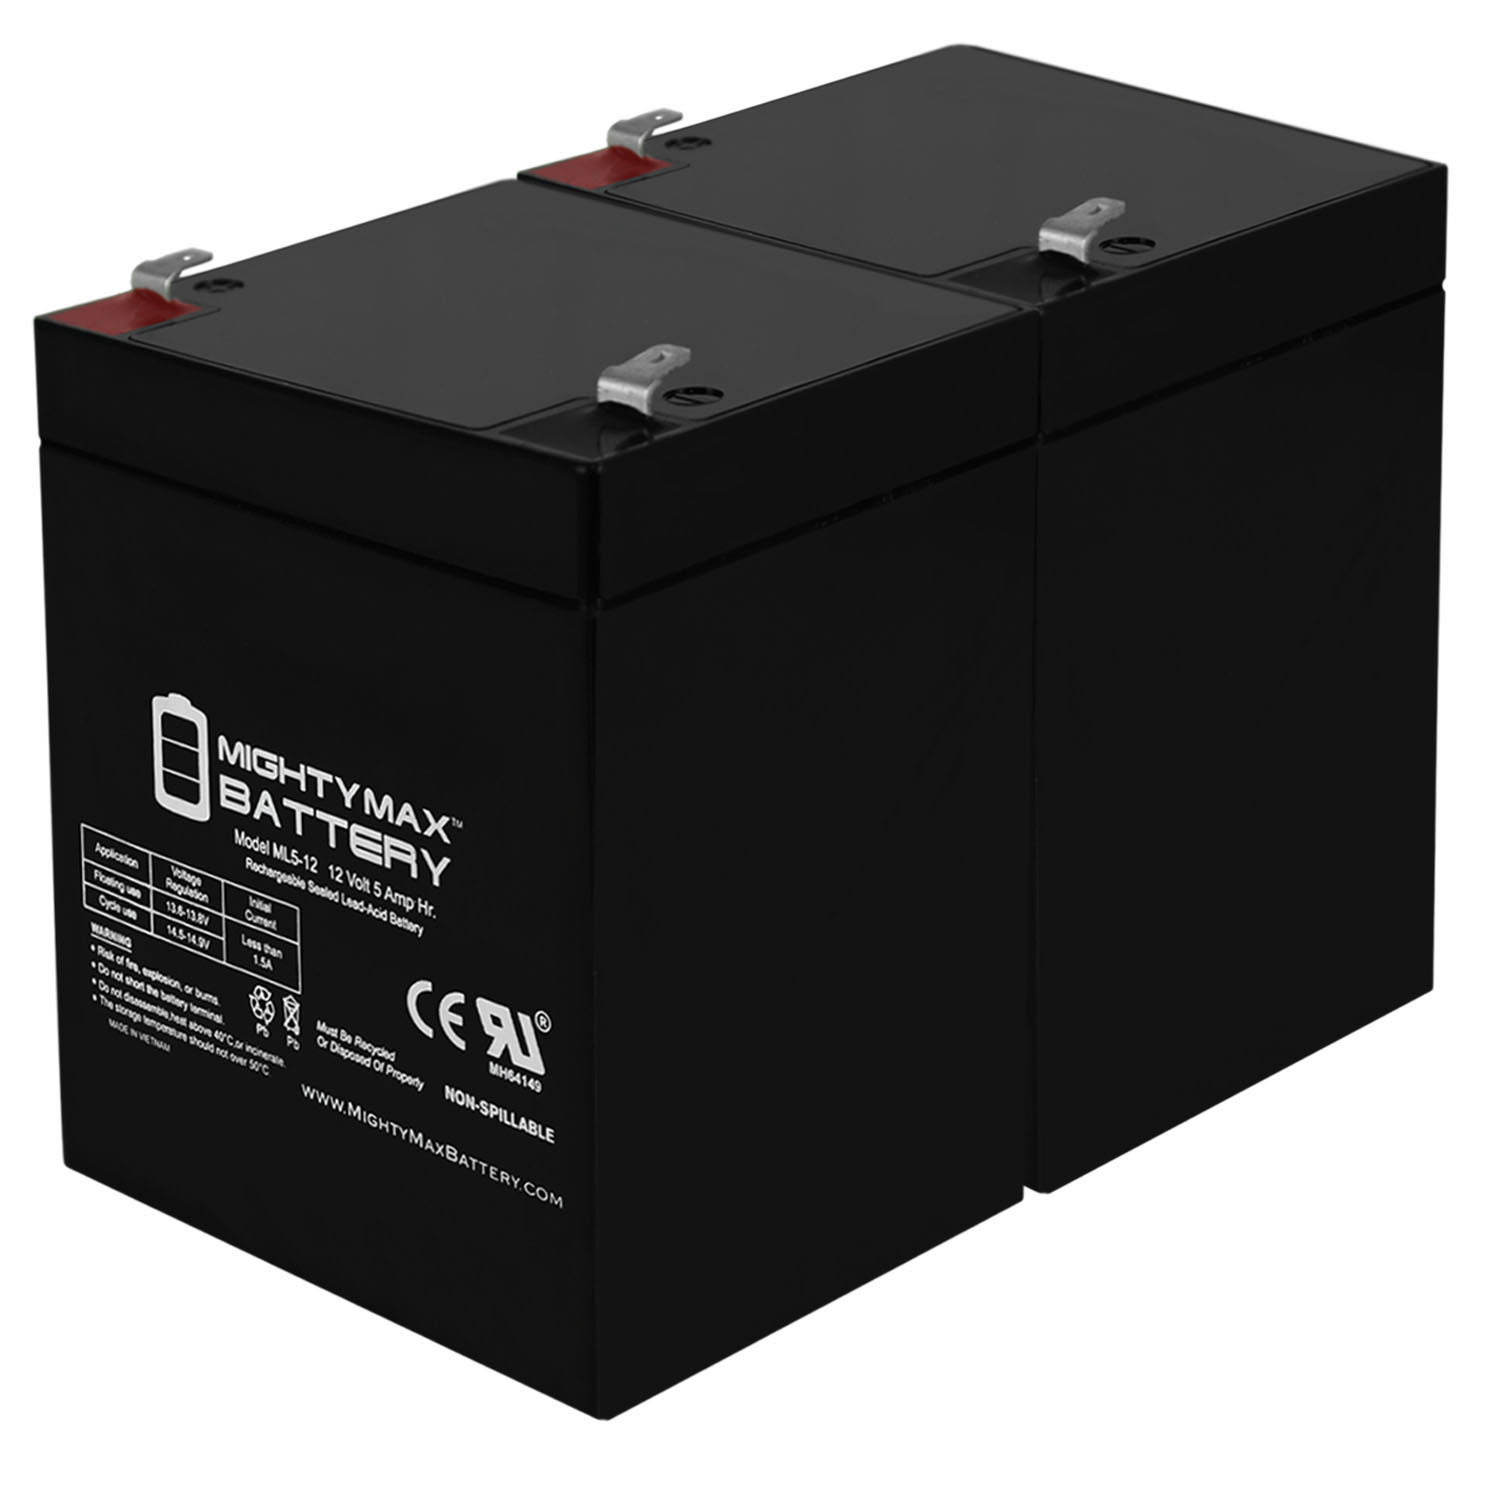 12V 5AH SLA Replacement Battery for Razor E100 Red 13111260 - 2 Pack